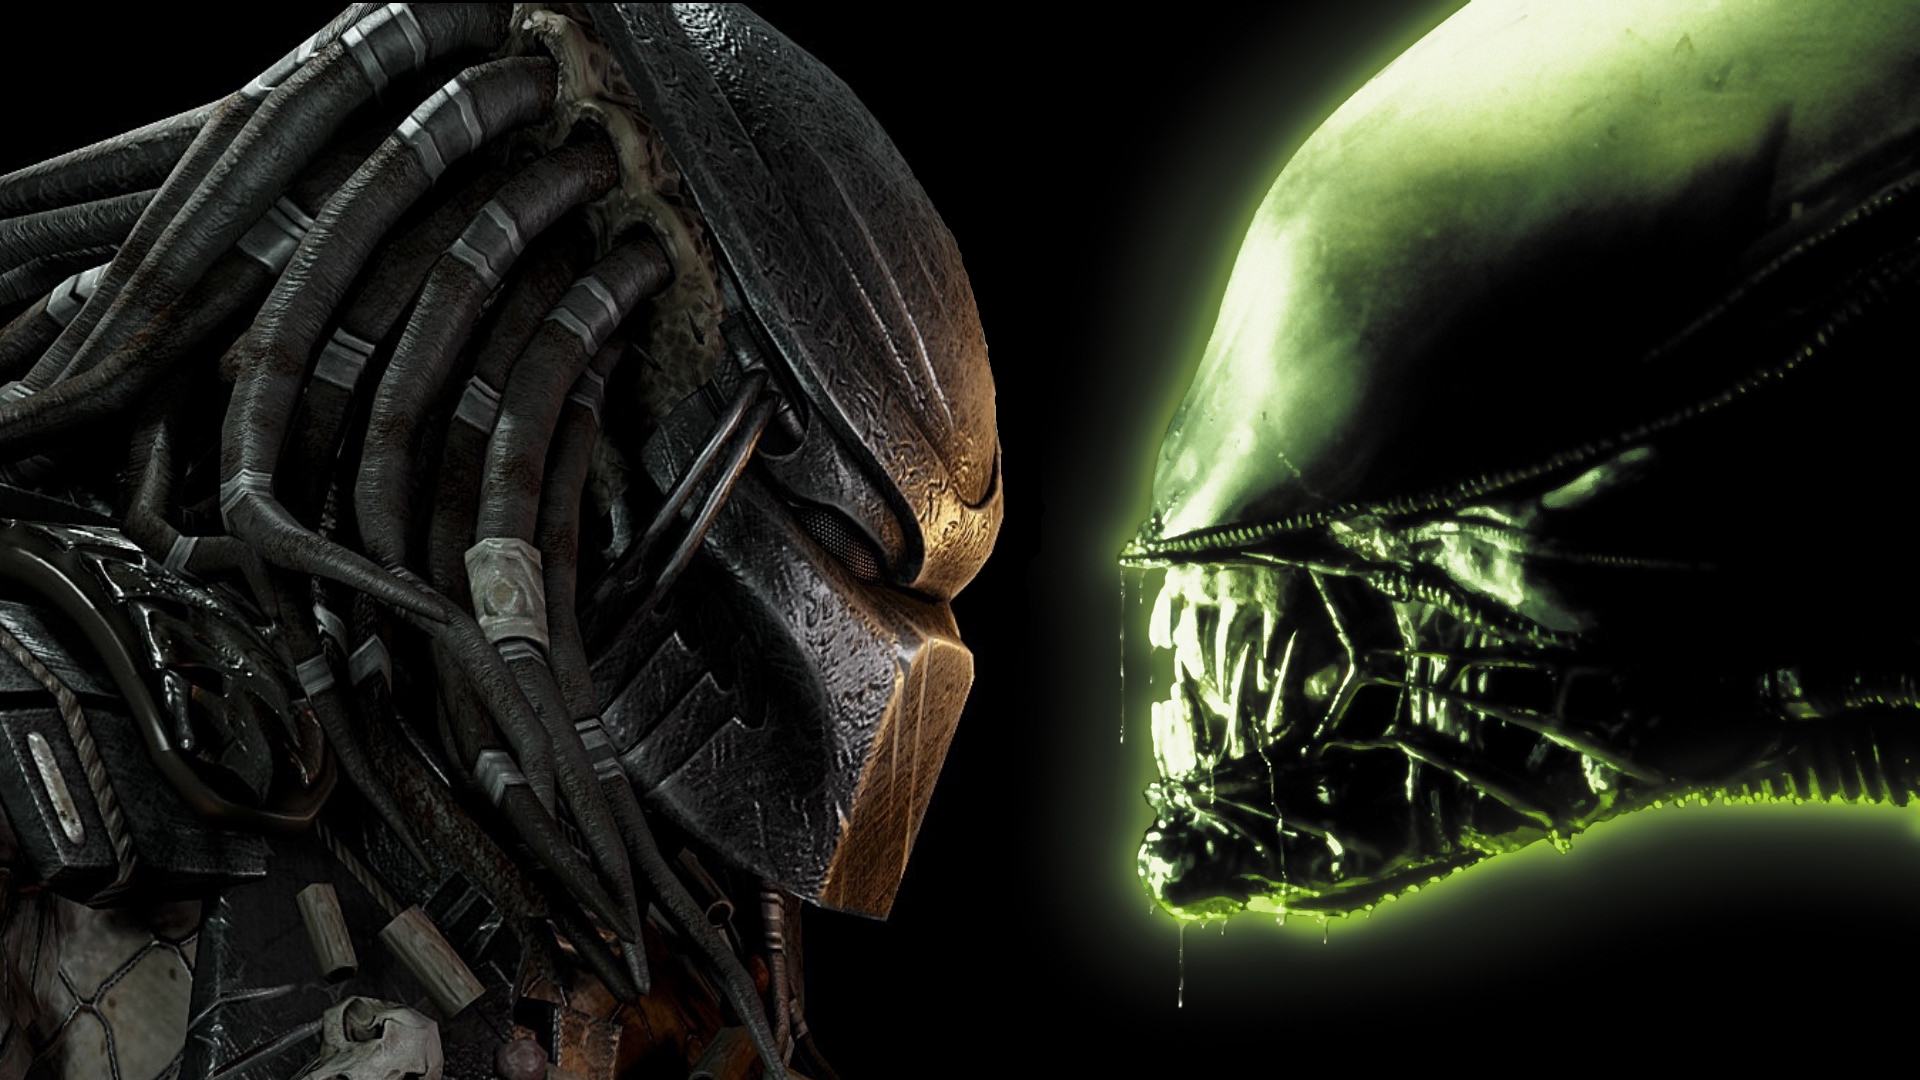 Aliens vs Predator wallpaper by ethaclane on DeviantArt